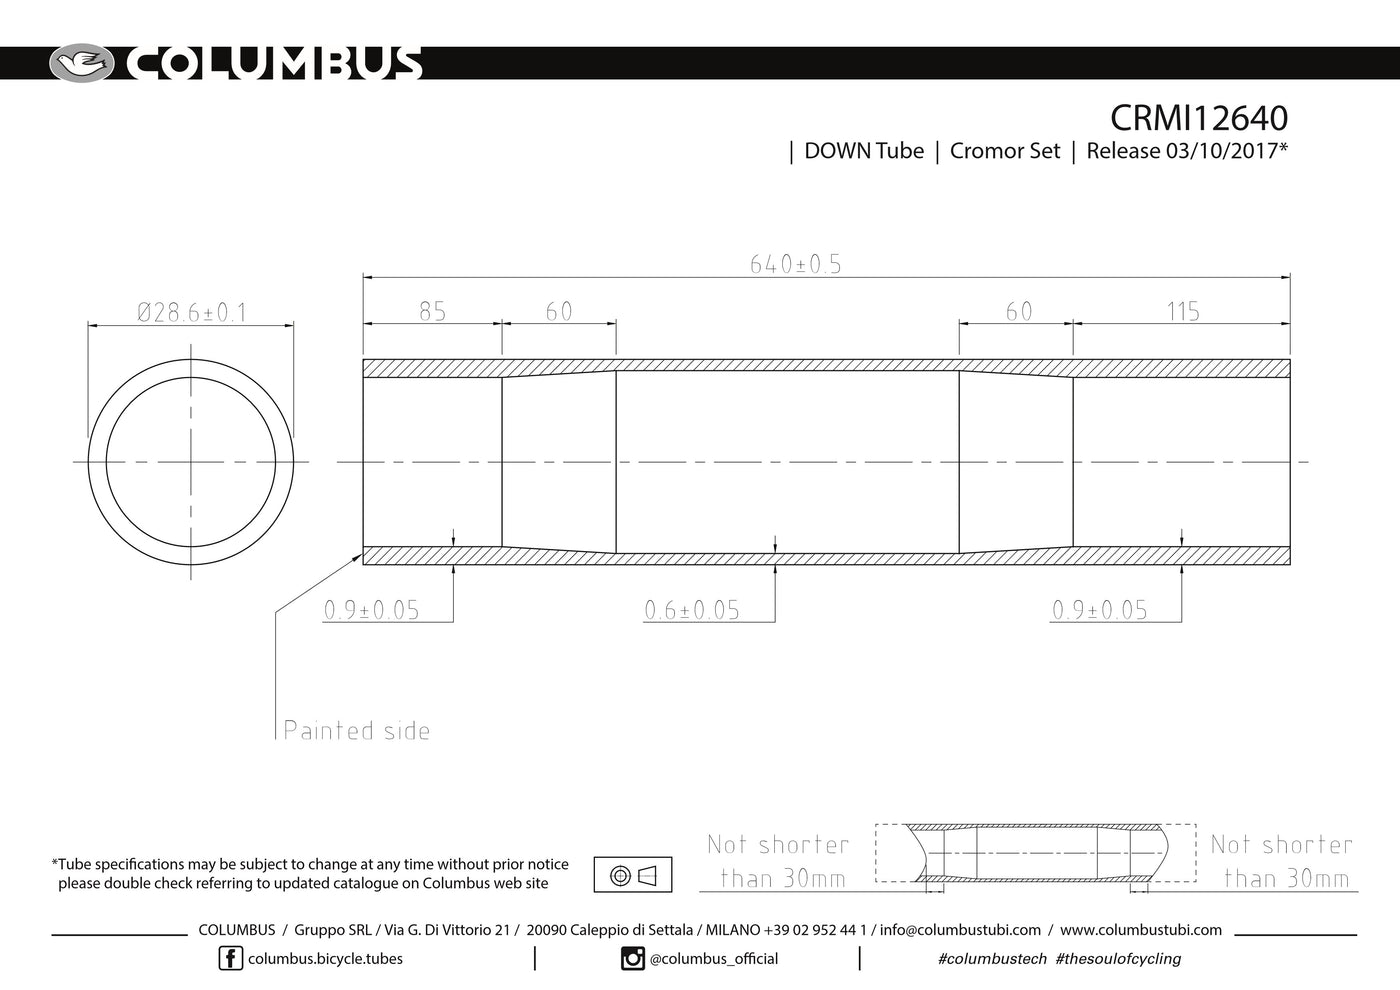 CRMI12640  Columbus Tubing Cromor down tube - 28.6 diameter - .9/.6/.9 wall thickness. Length = 640